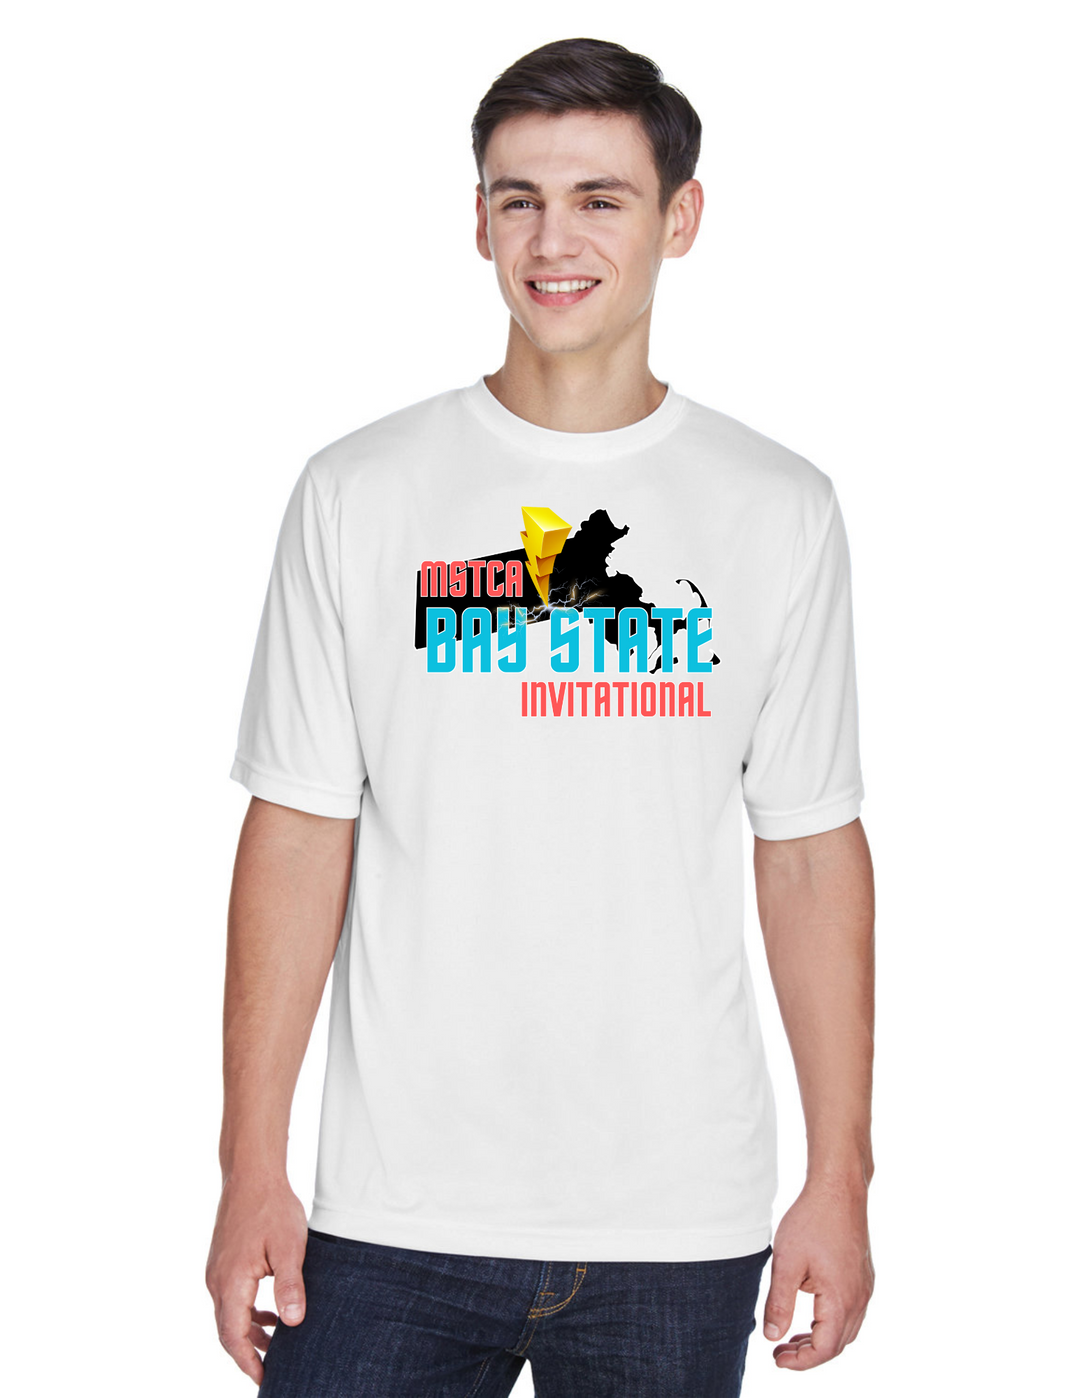 MSTCA Bay State Invitational Team 365 Men's Zone Performance T-Shirt (TT11)